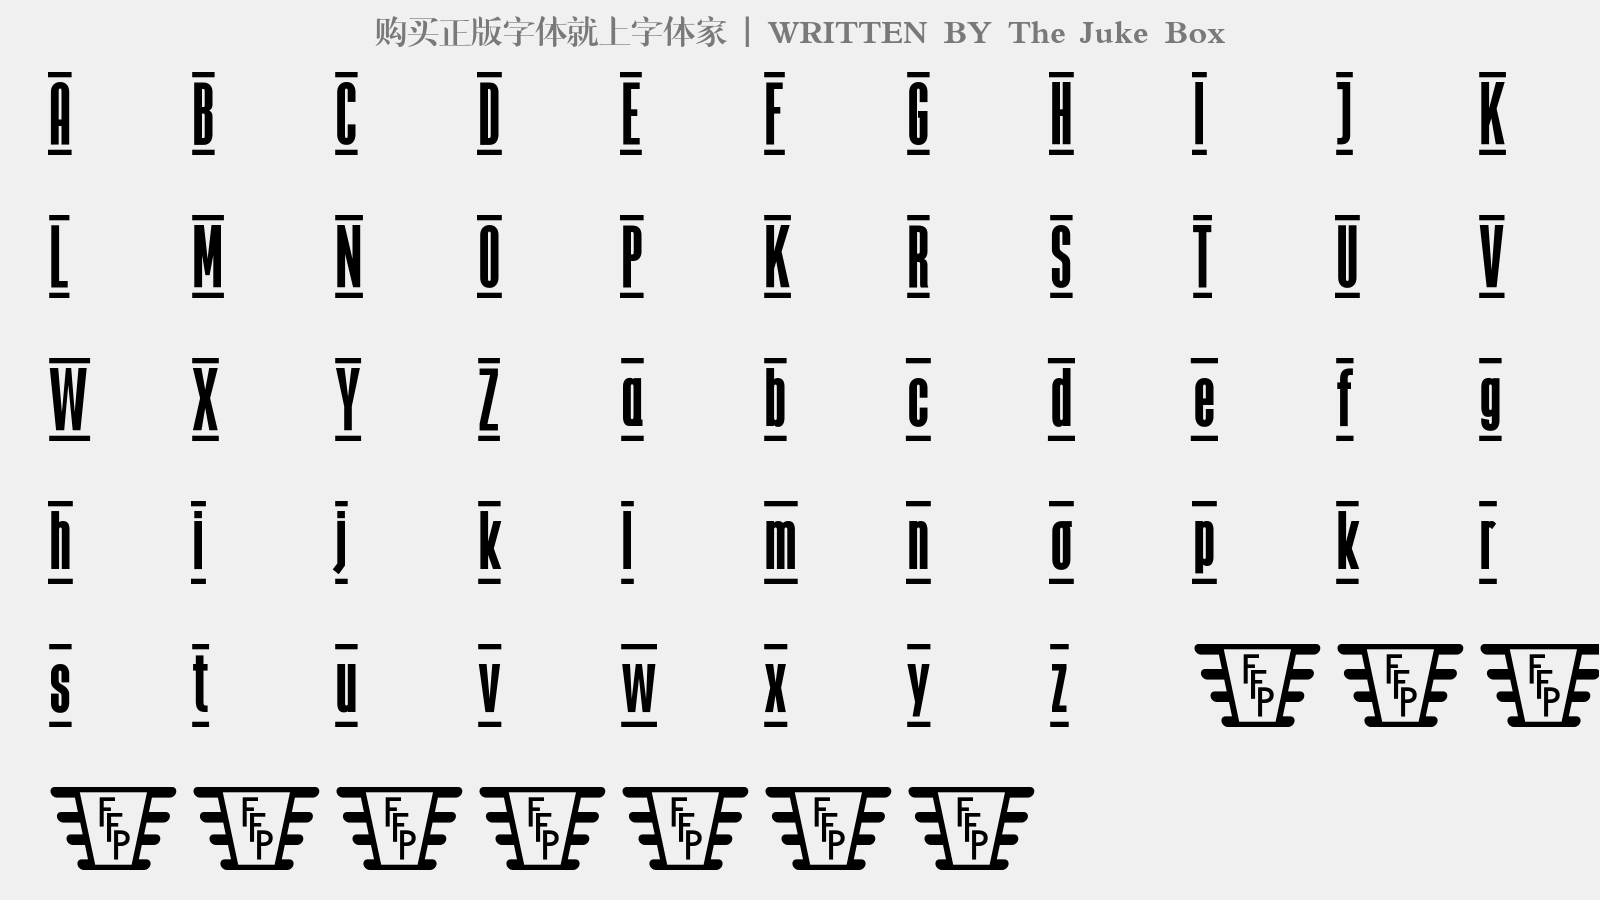 The Juke Box - 大写字母/小写字母/数字